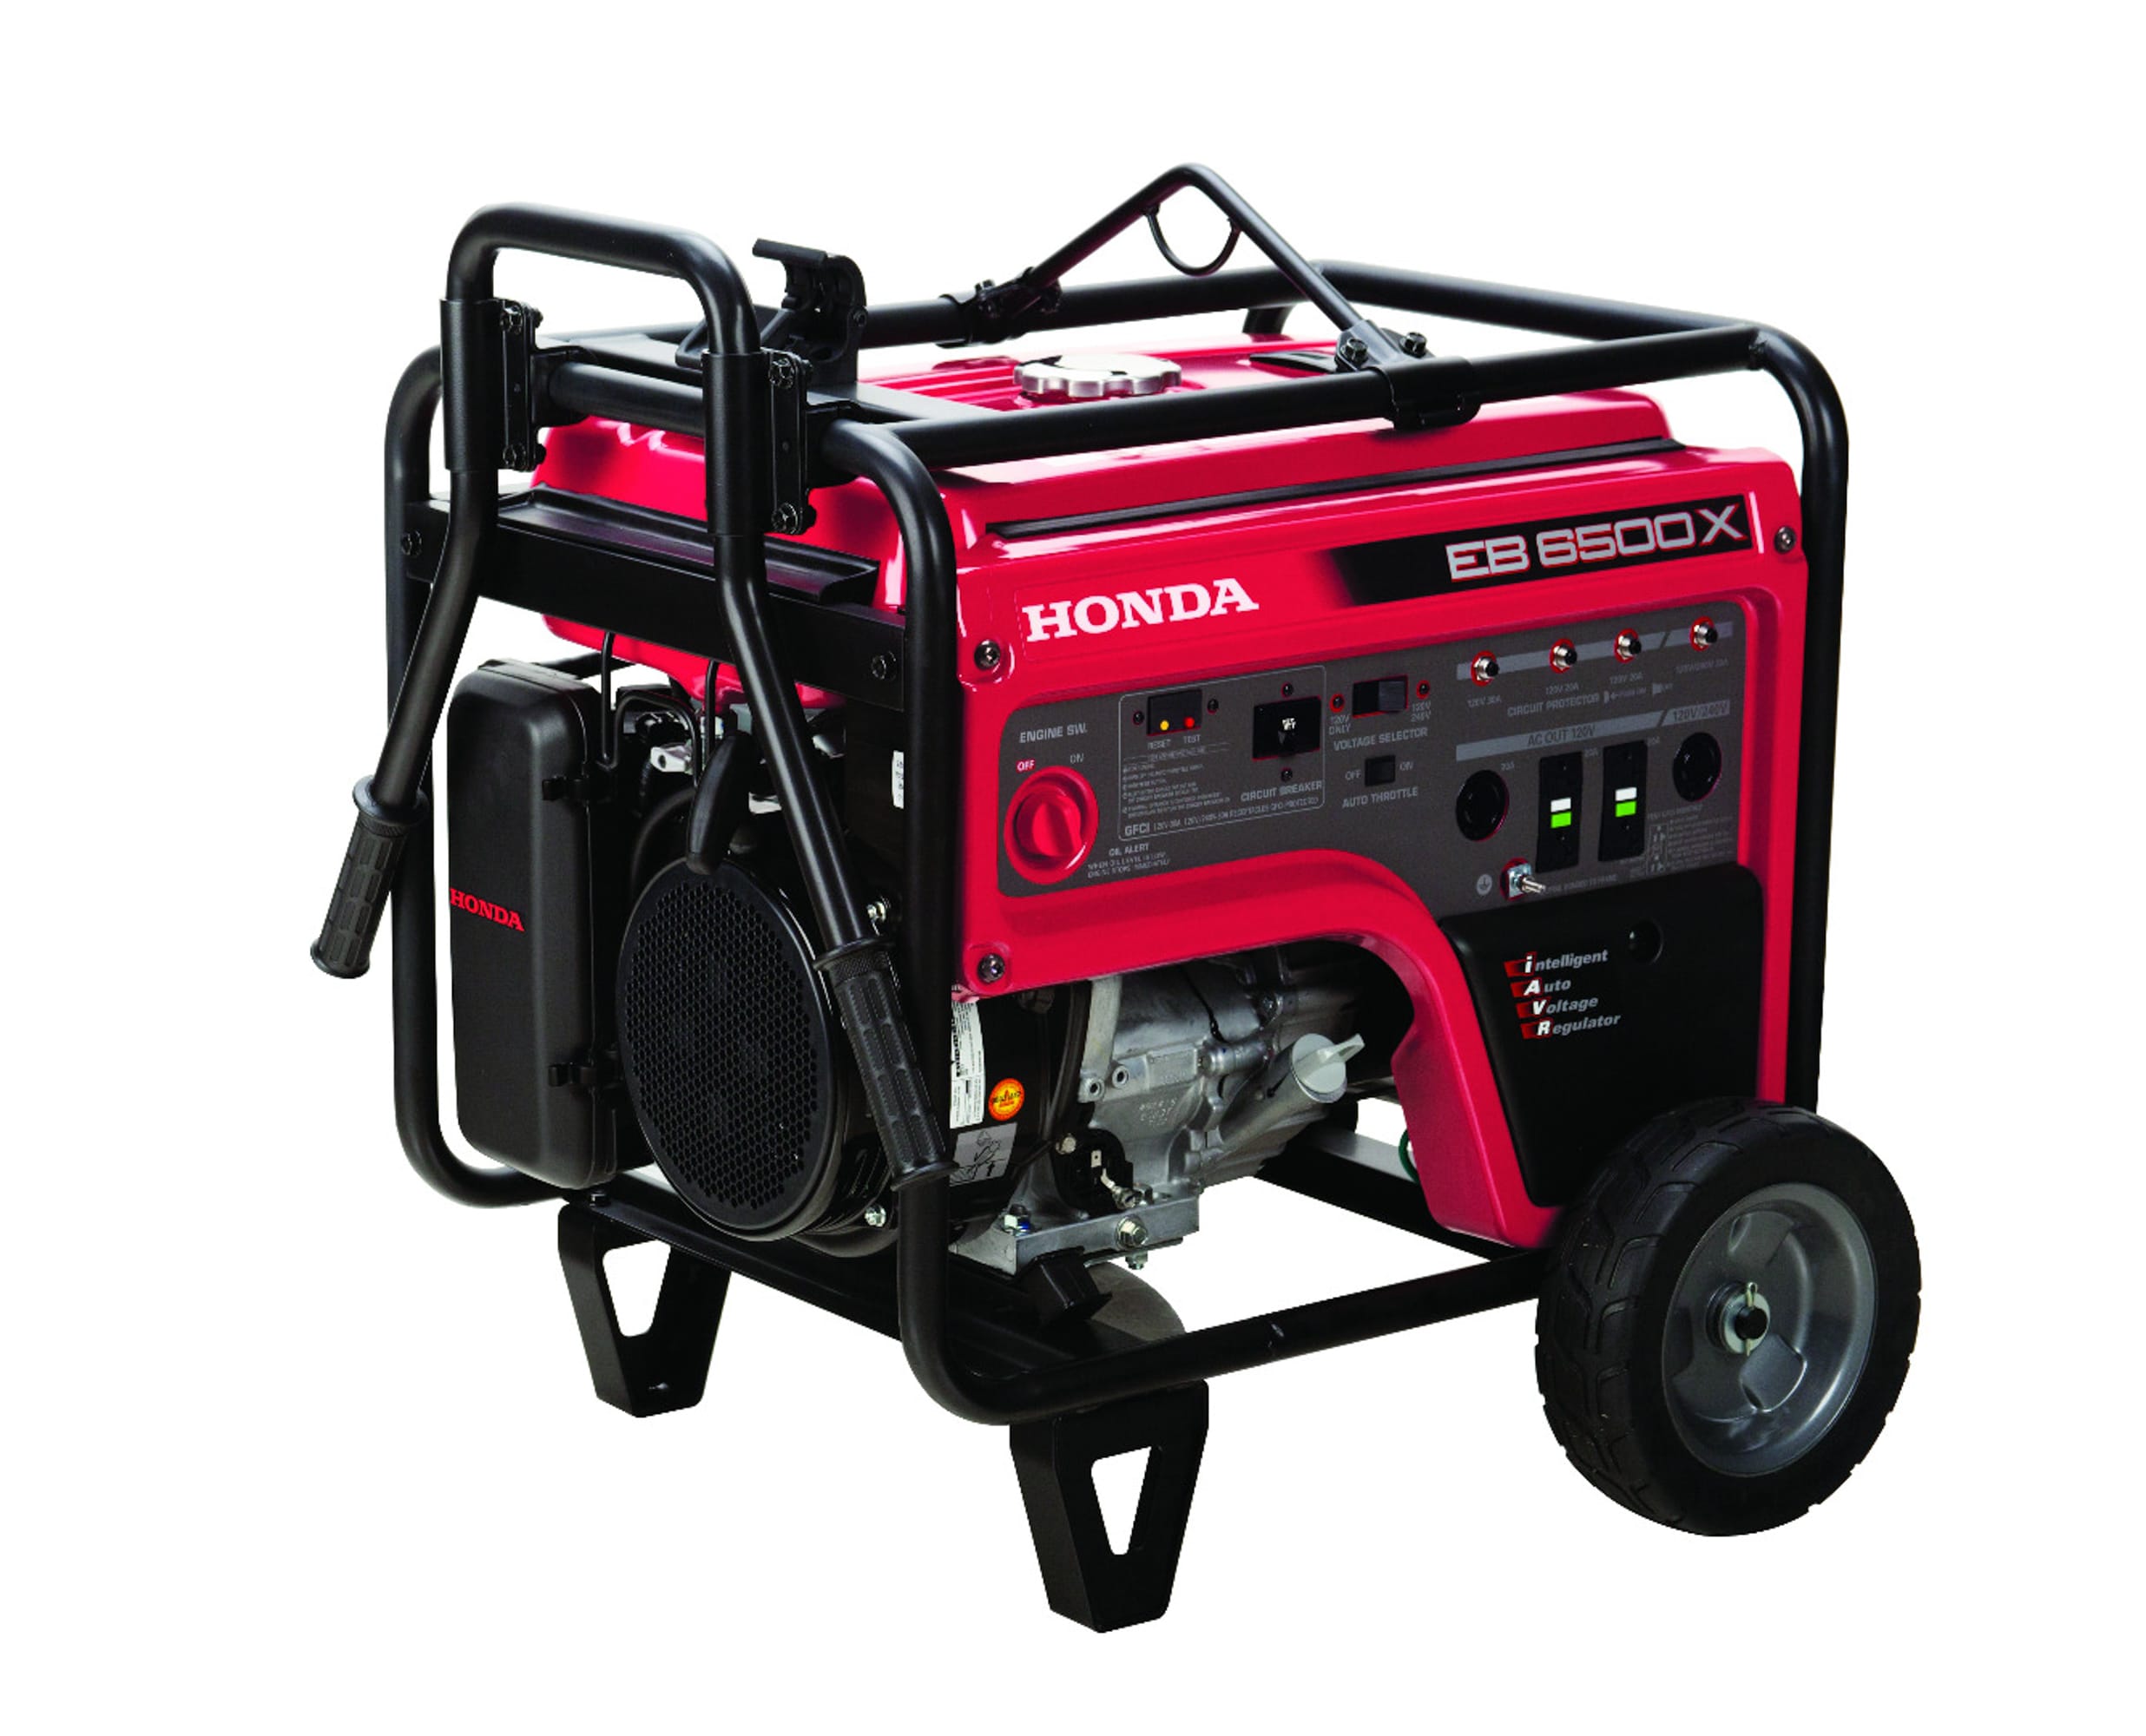 HONDA 6500-Watt Gasoline Portable Generator the Portable Generators department at